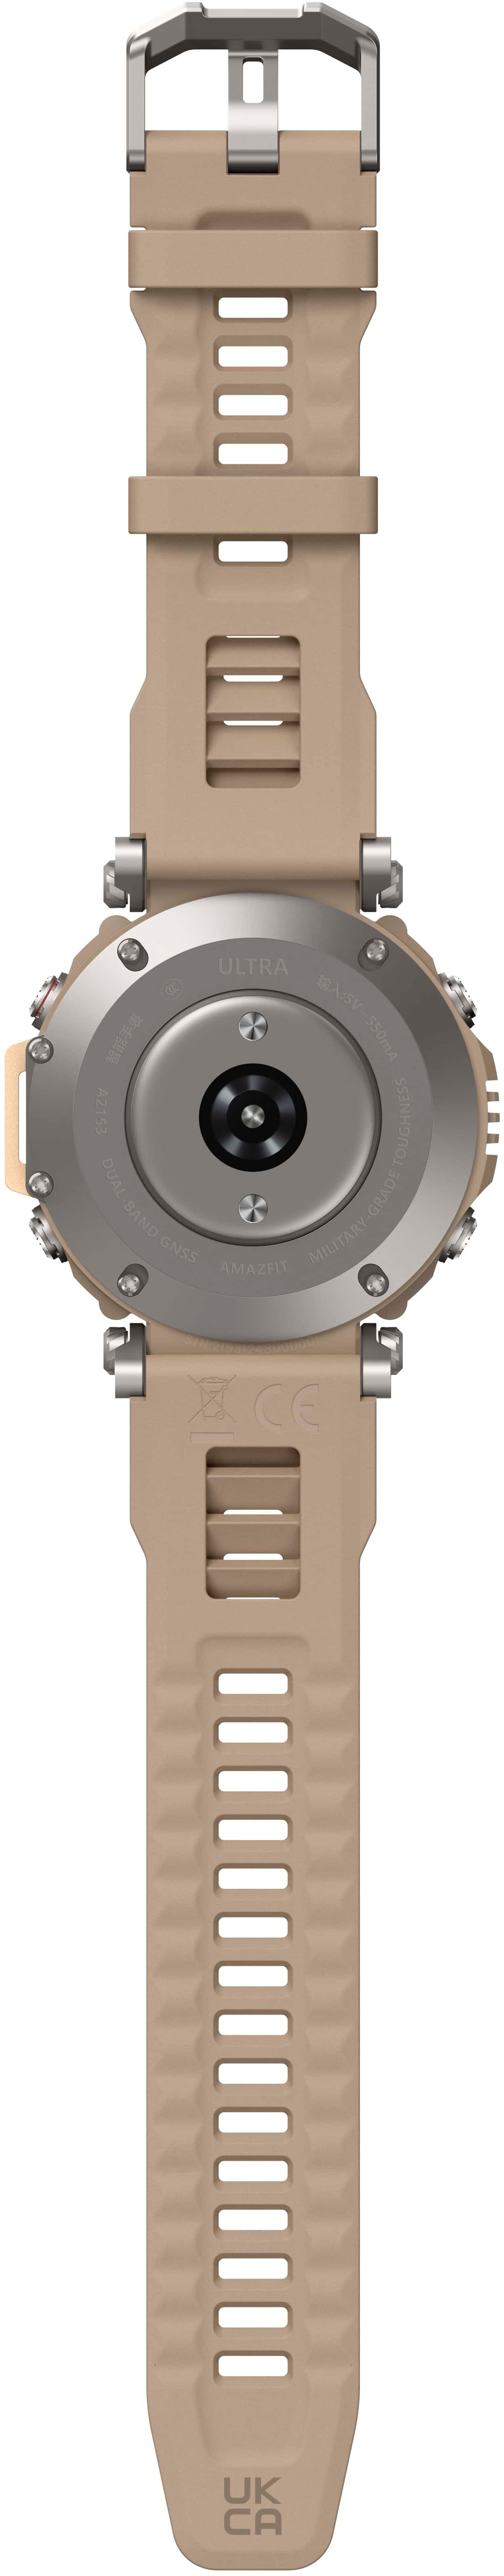 Amazfit T-Rex 2 Smart Watch for Men - (1Year Official Warranty